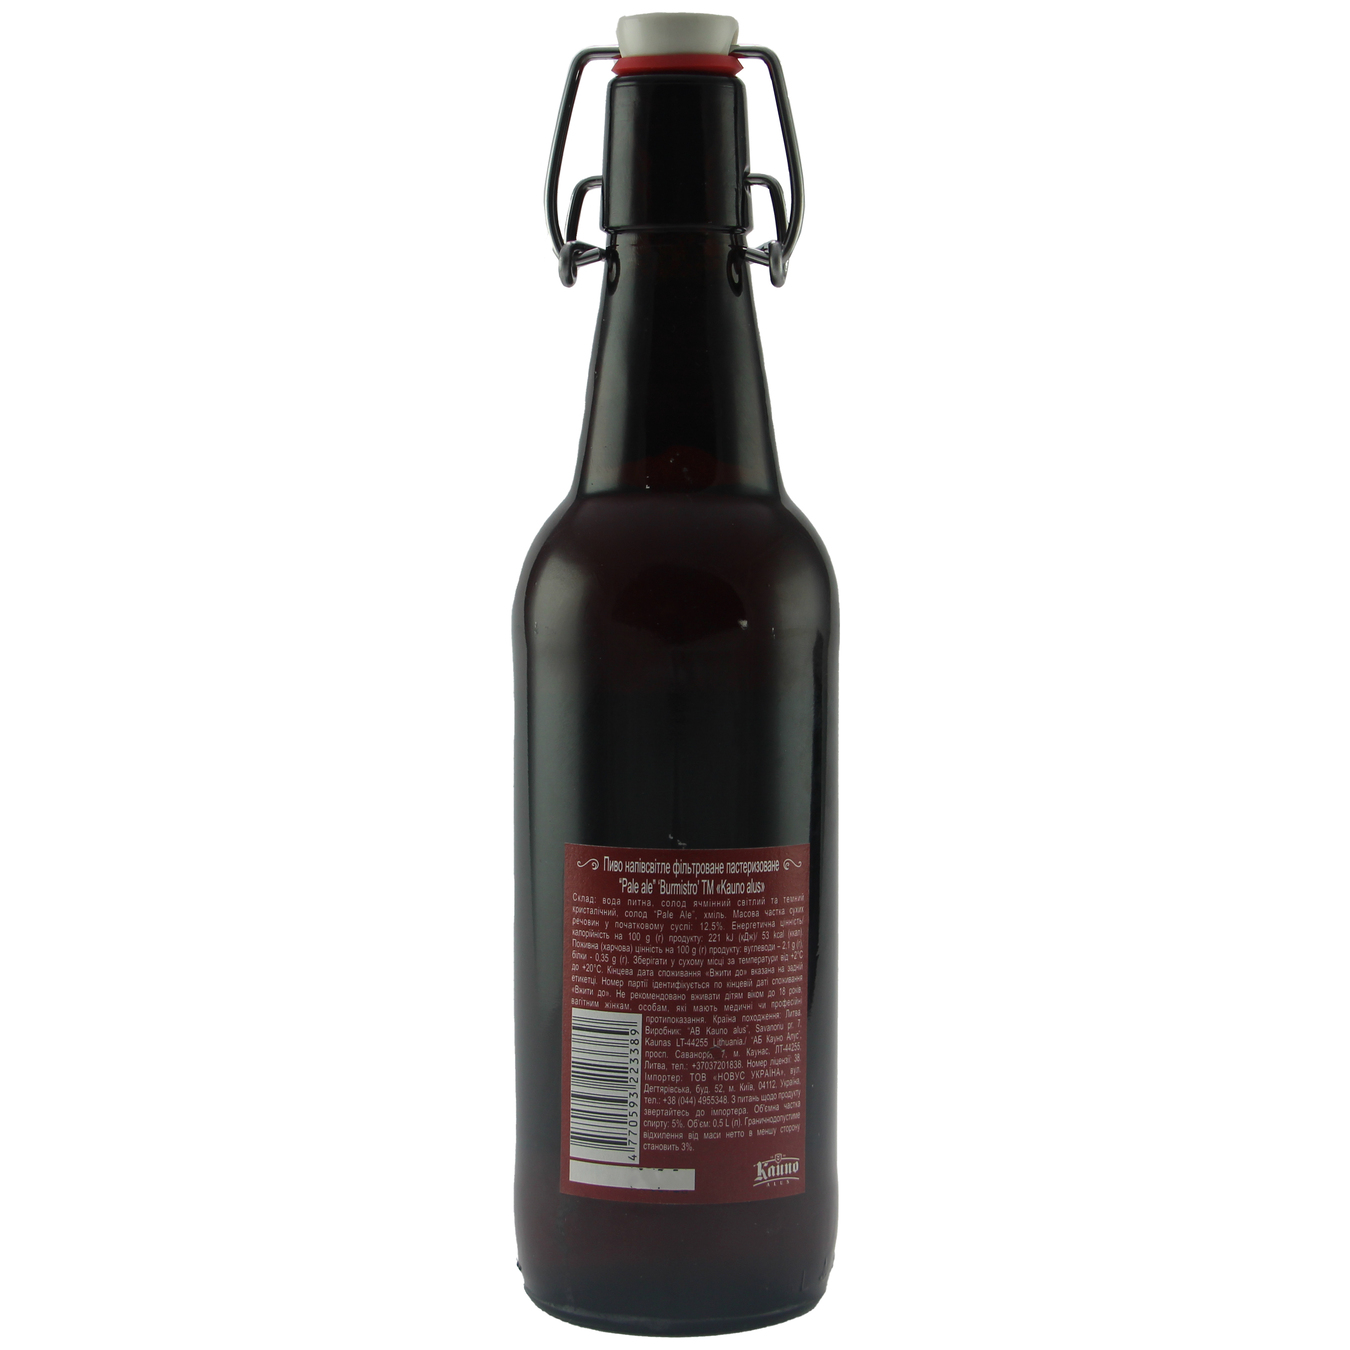 Kauno Alus Burmistro Klasikinis Pale Ale semi-light beer 5% 0,5l 2